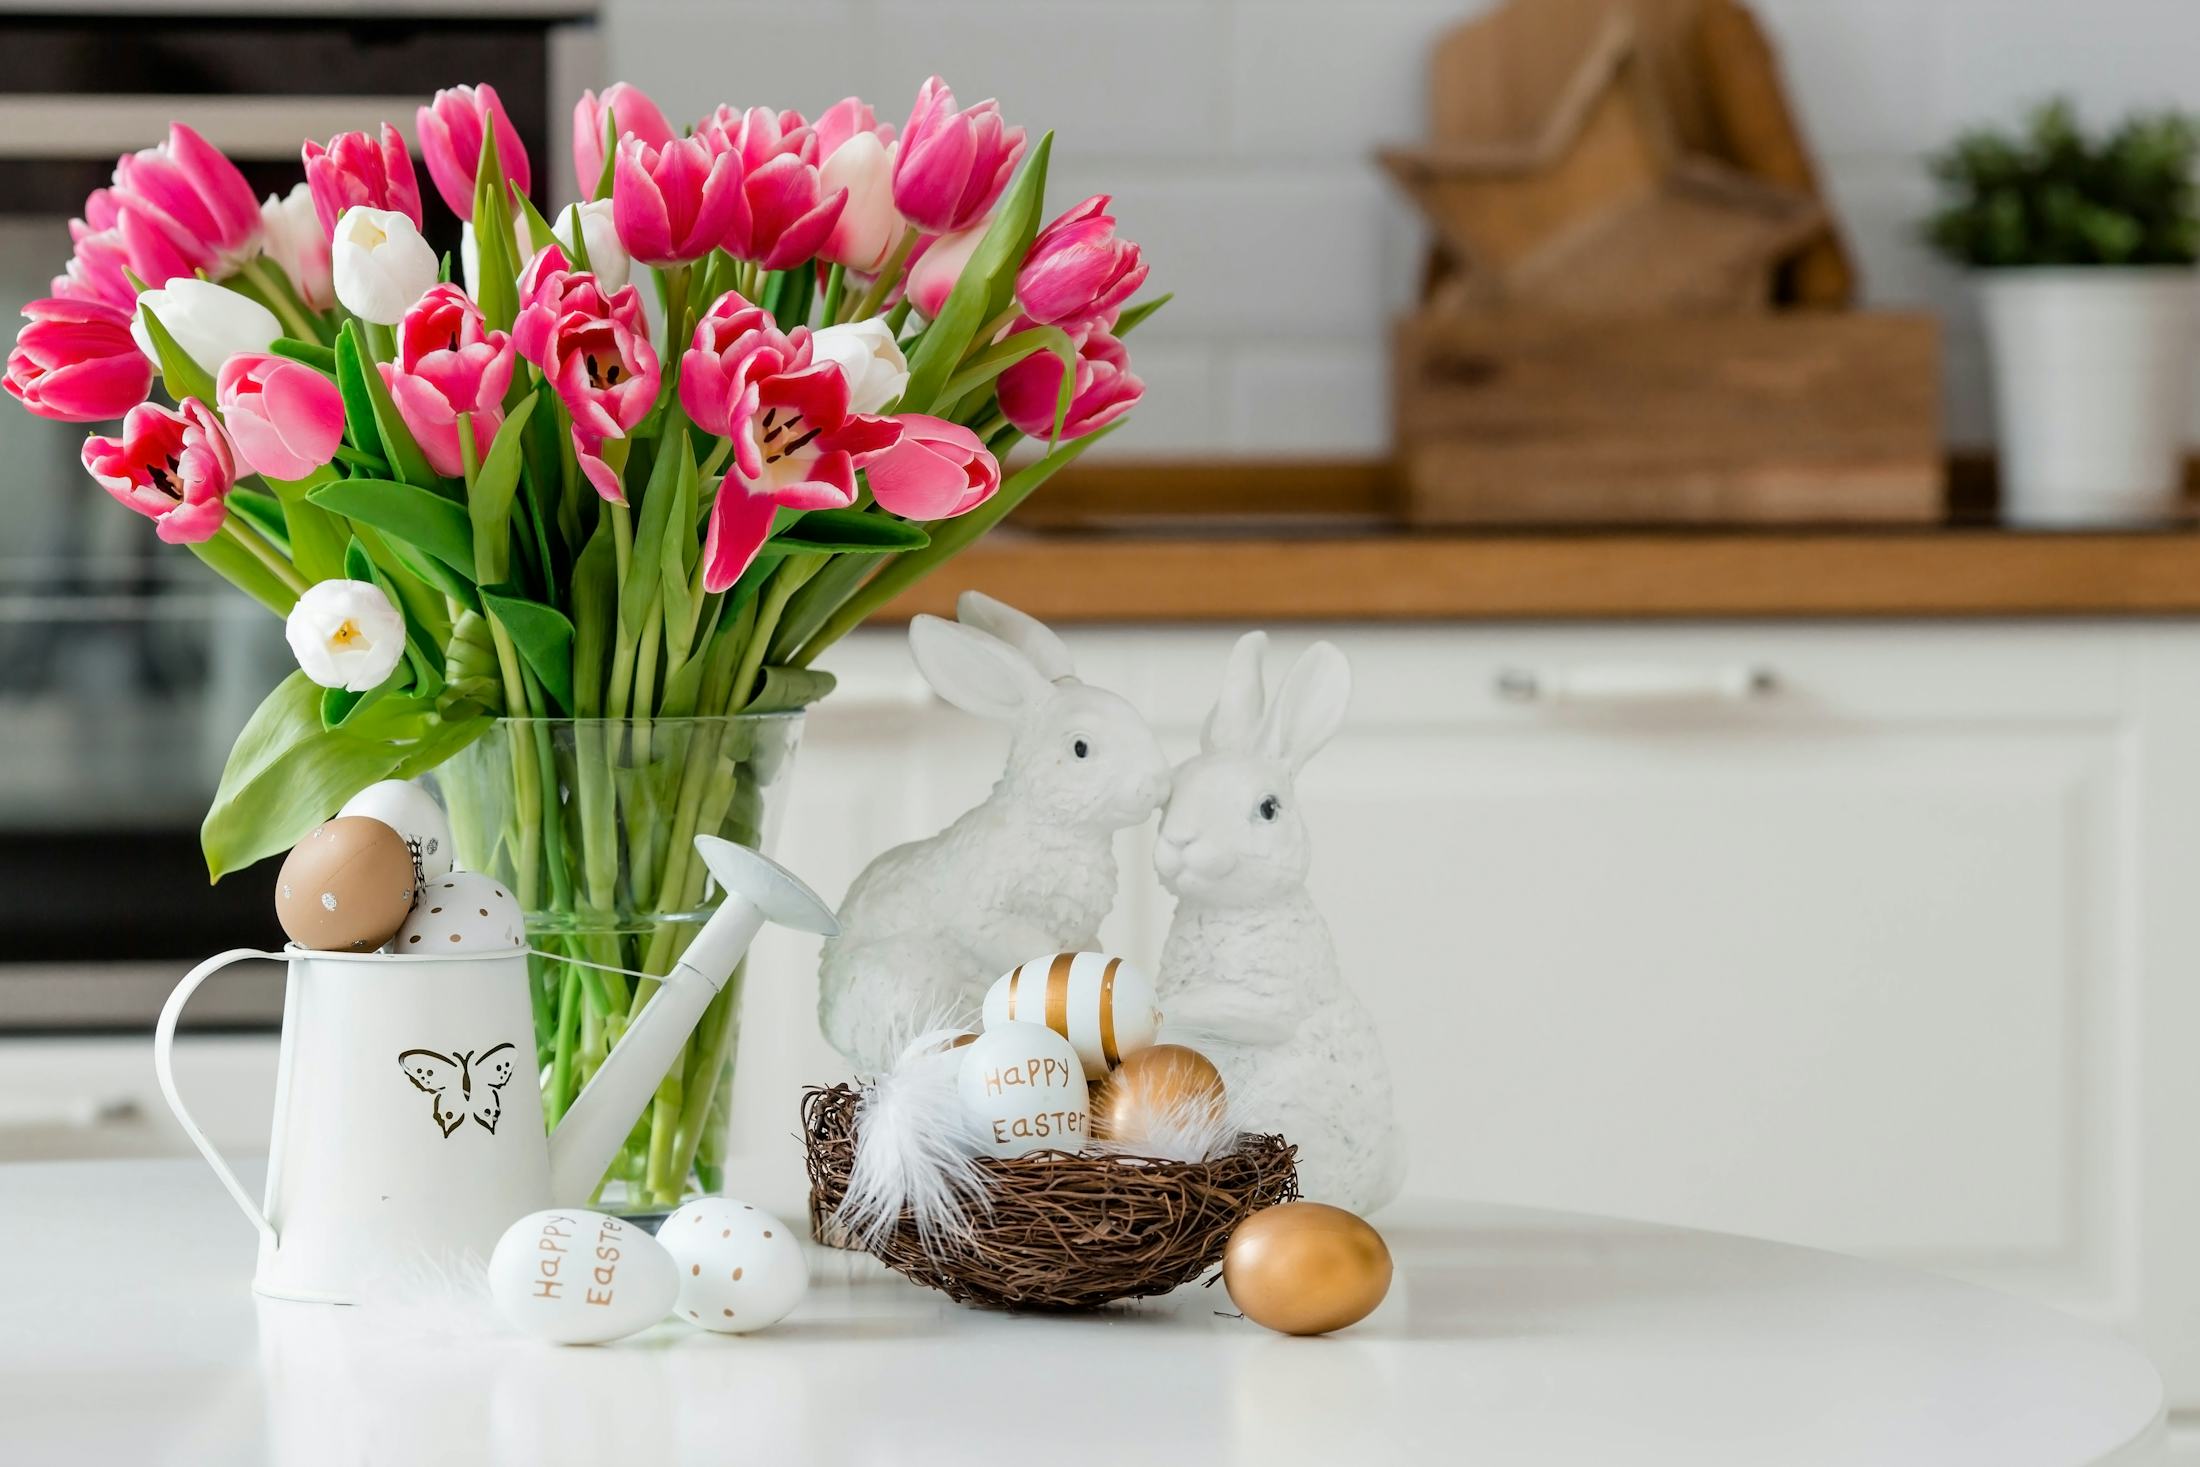 10 Cute & Easy Easter Table Setting Ideas